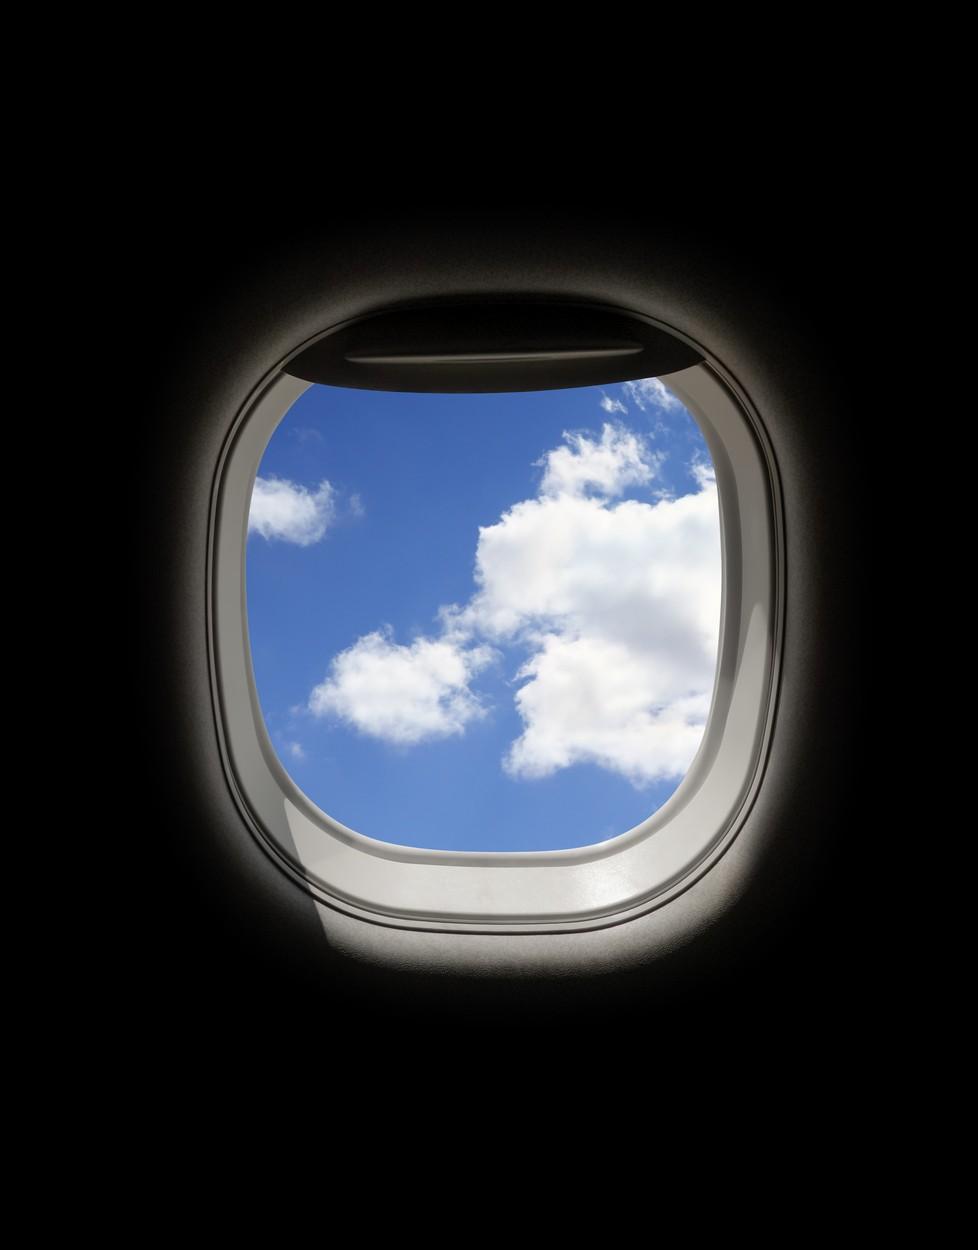 fereastra rotunda din avion prin care se vede cerul